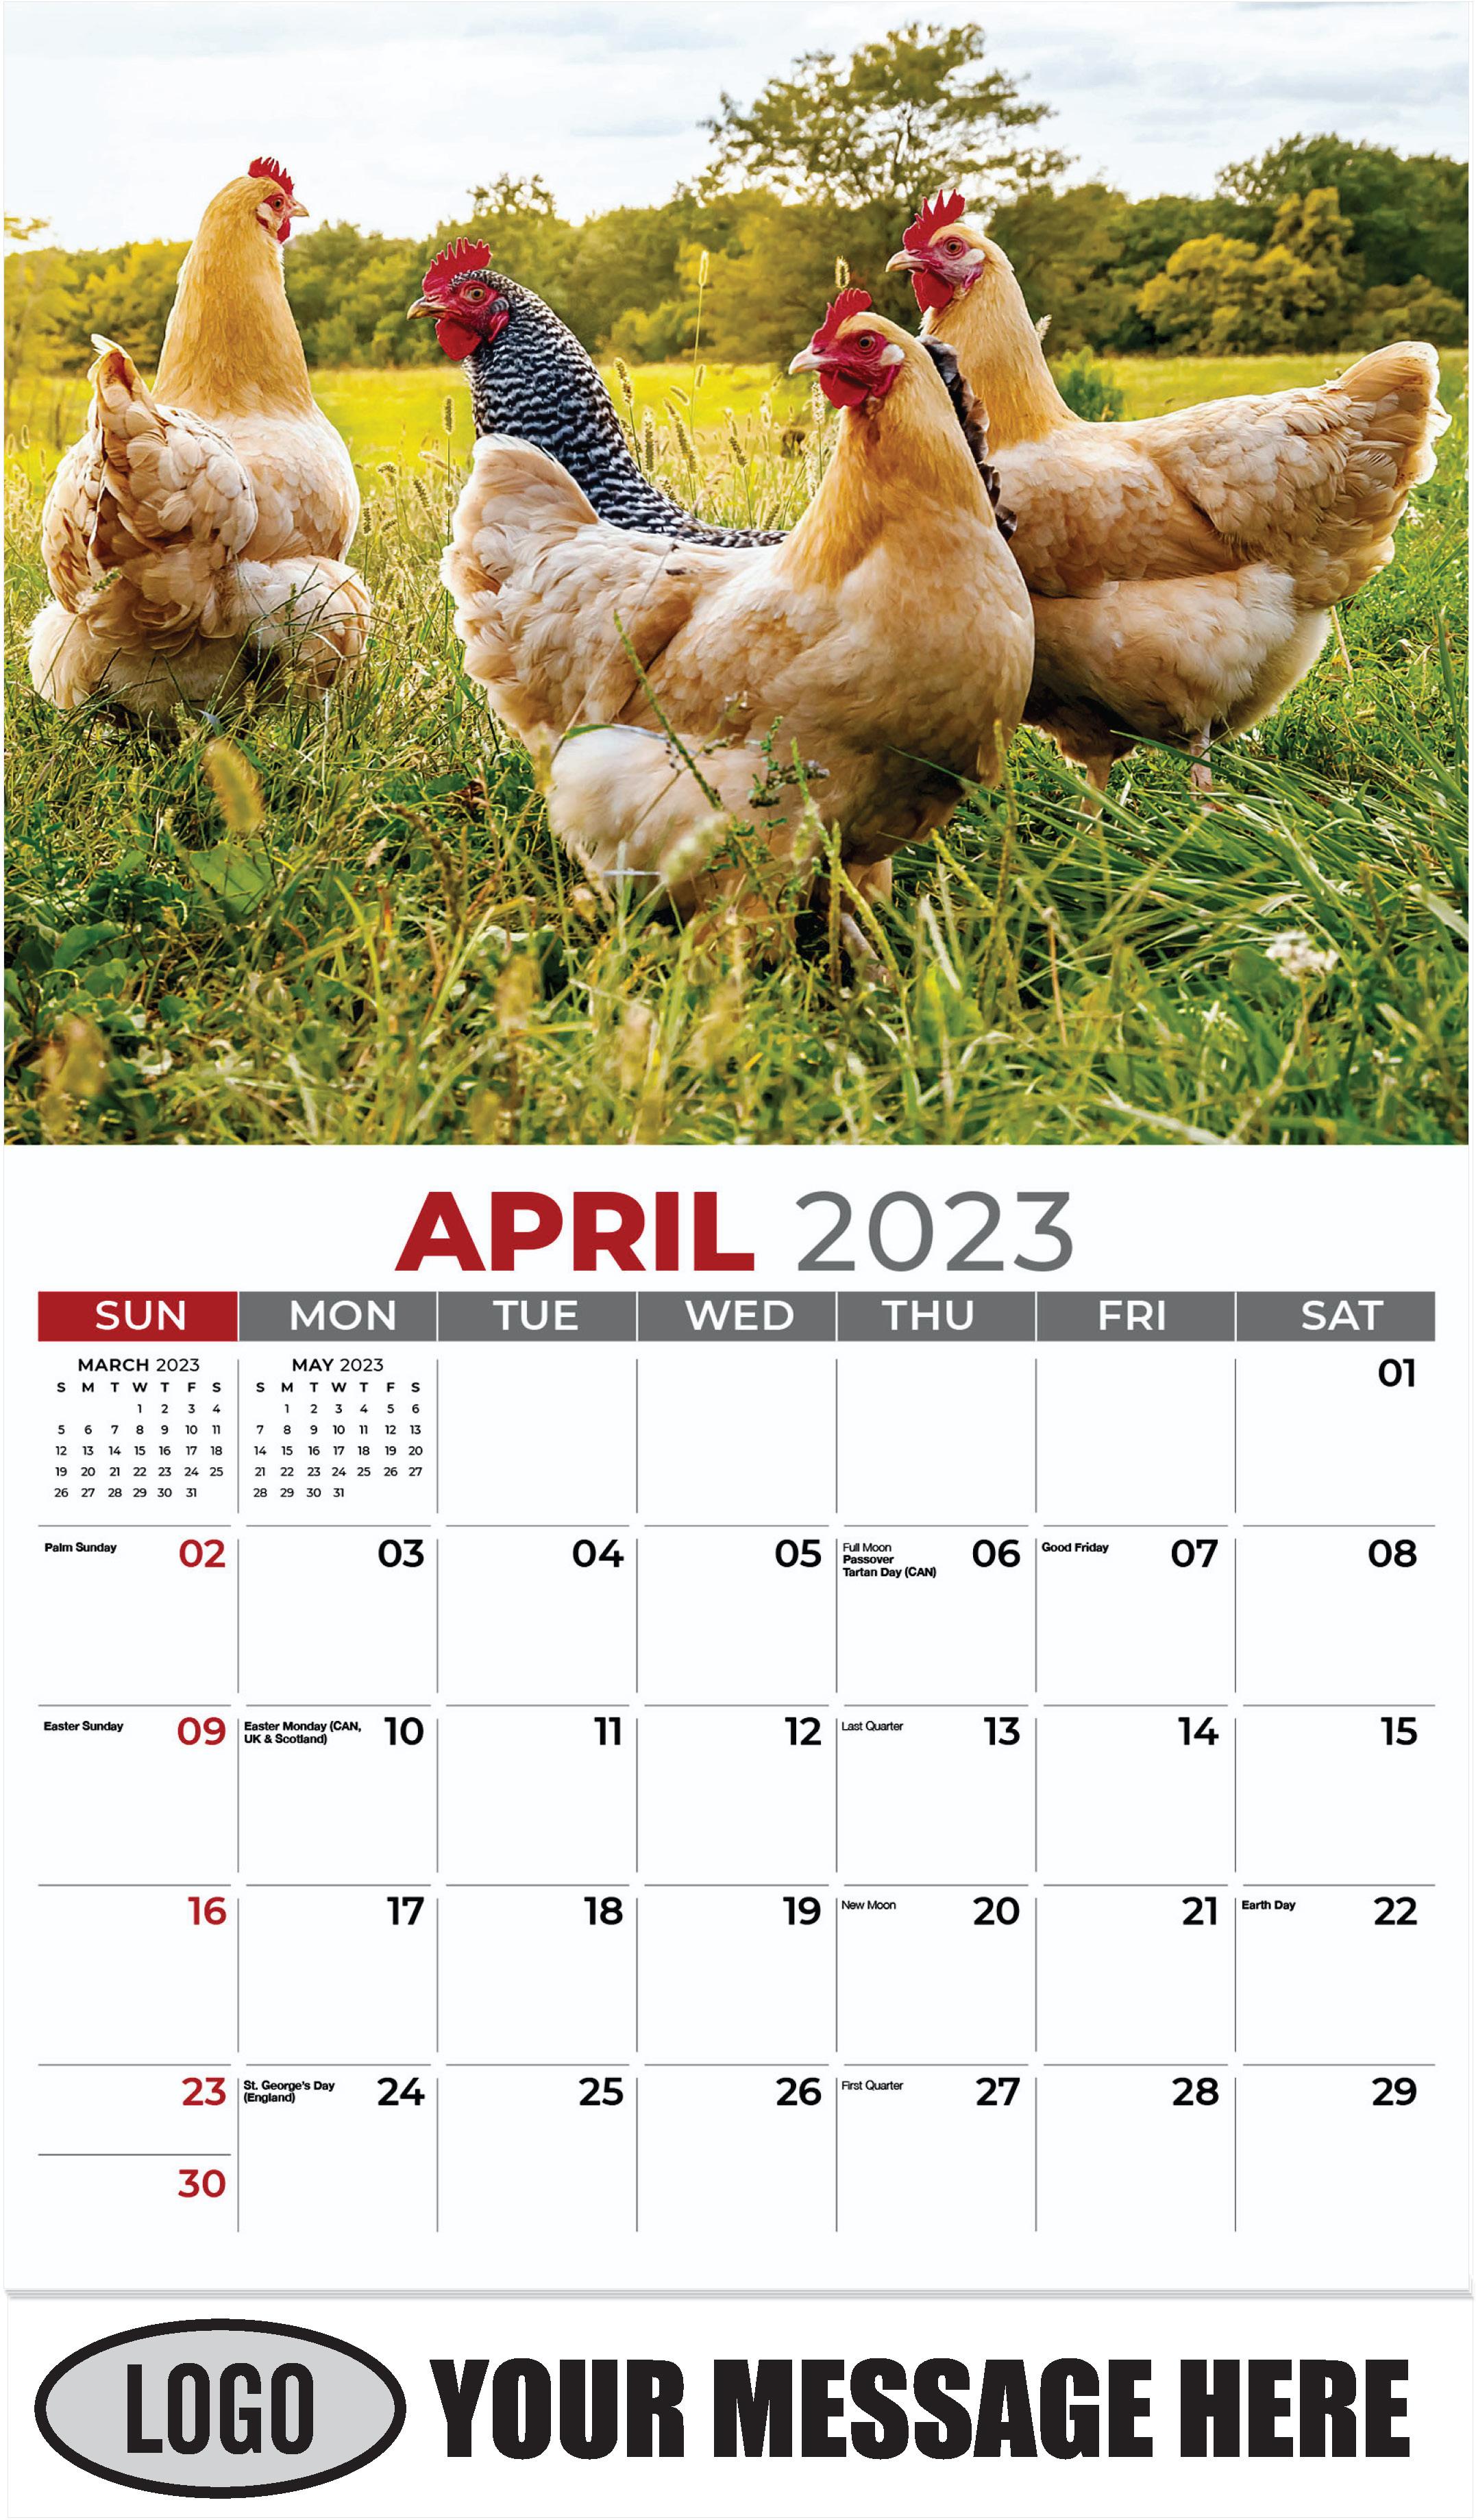 A Chicken Sunset - April - Country Spirit 2023 Promotional Calendar